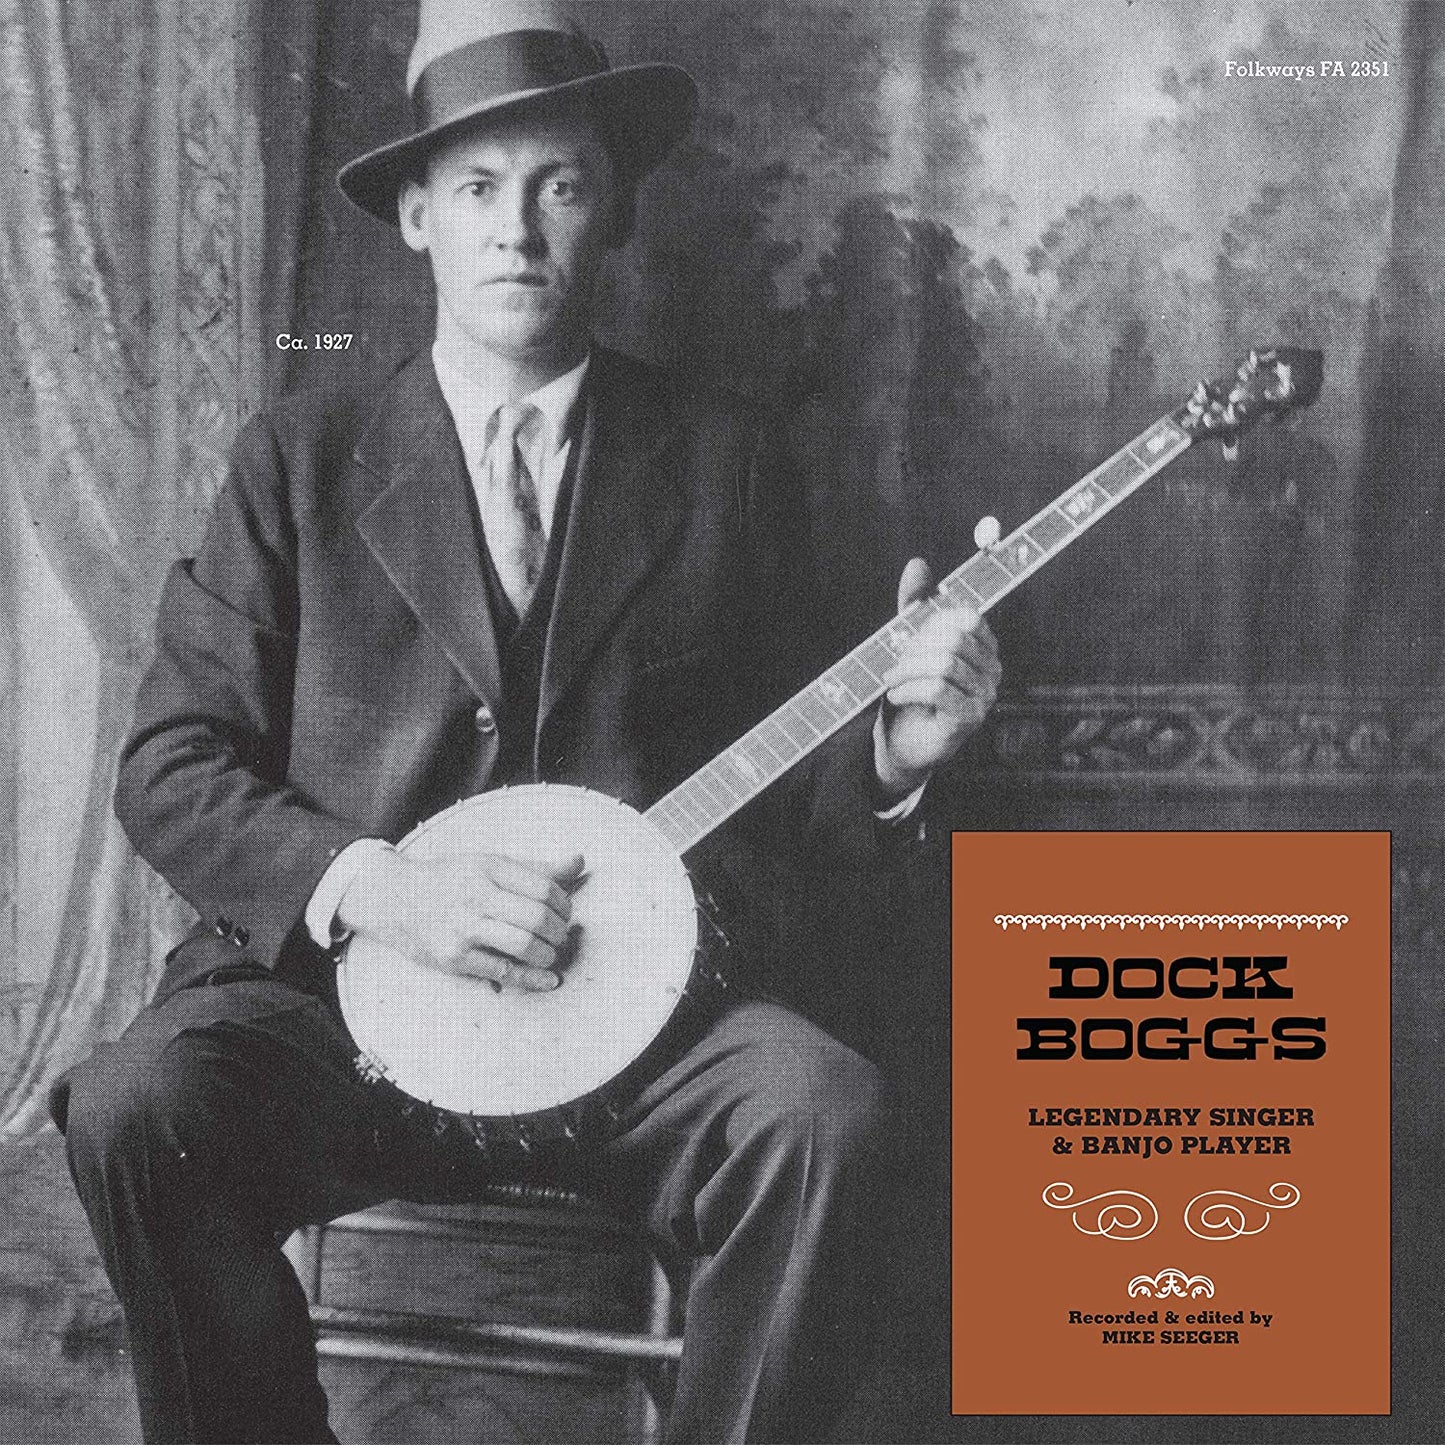 Boggs, Dock/Legendary Singer & Banjo Player (Smithsonian Folkways) [LP]